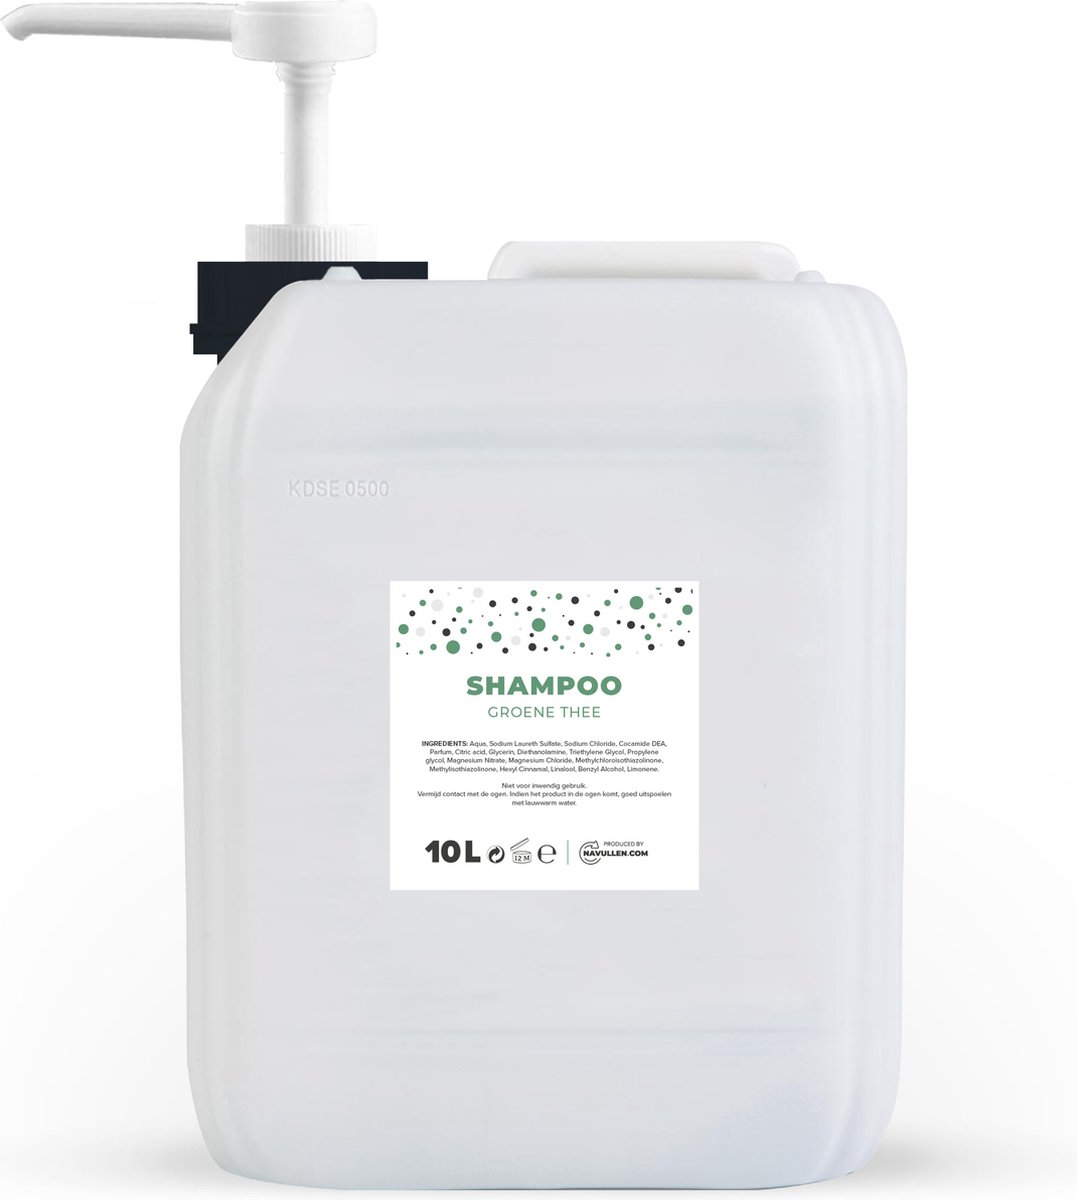 Shampoo - Groene thee - 10 Liter - Jerrycan - Met pomp - Navulling - Navullen